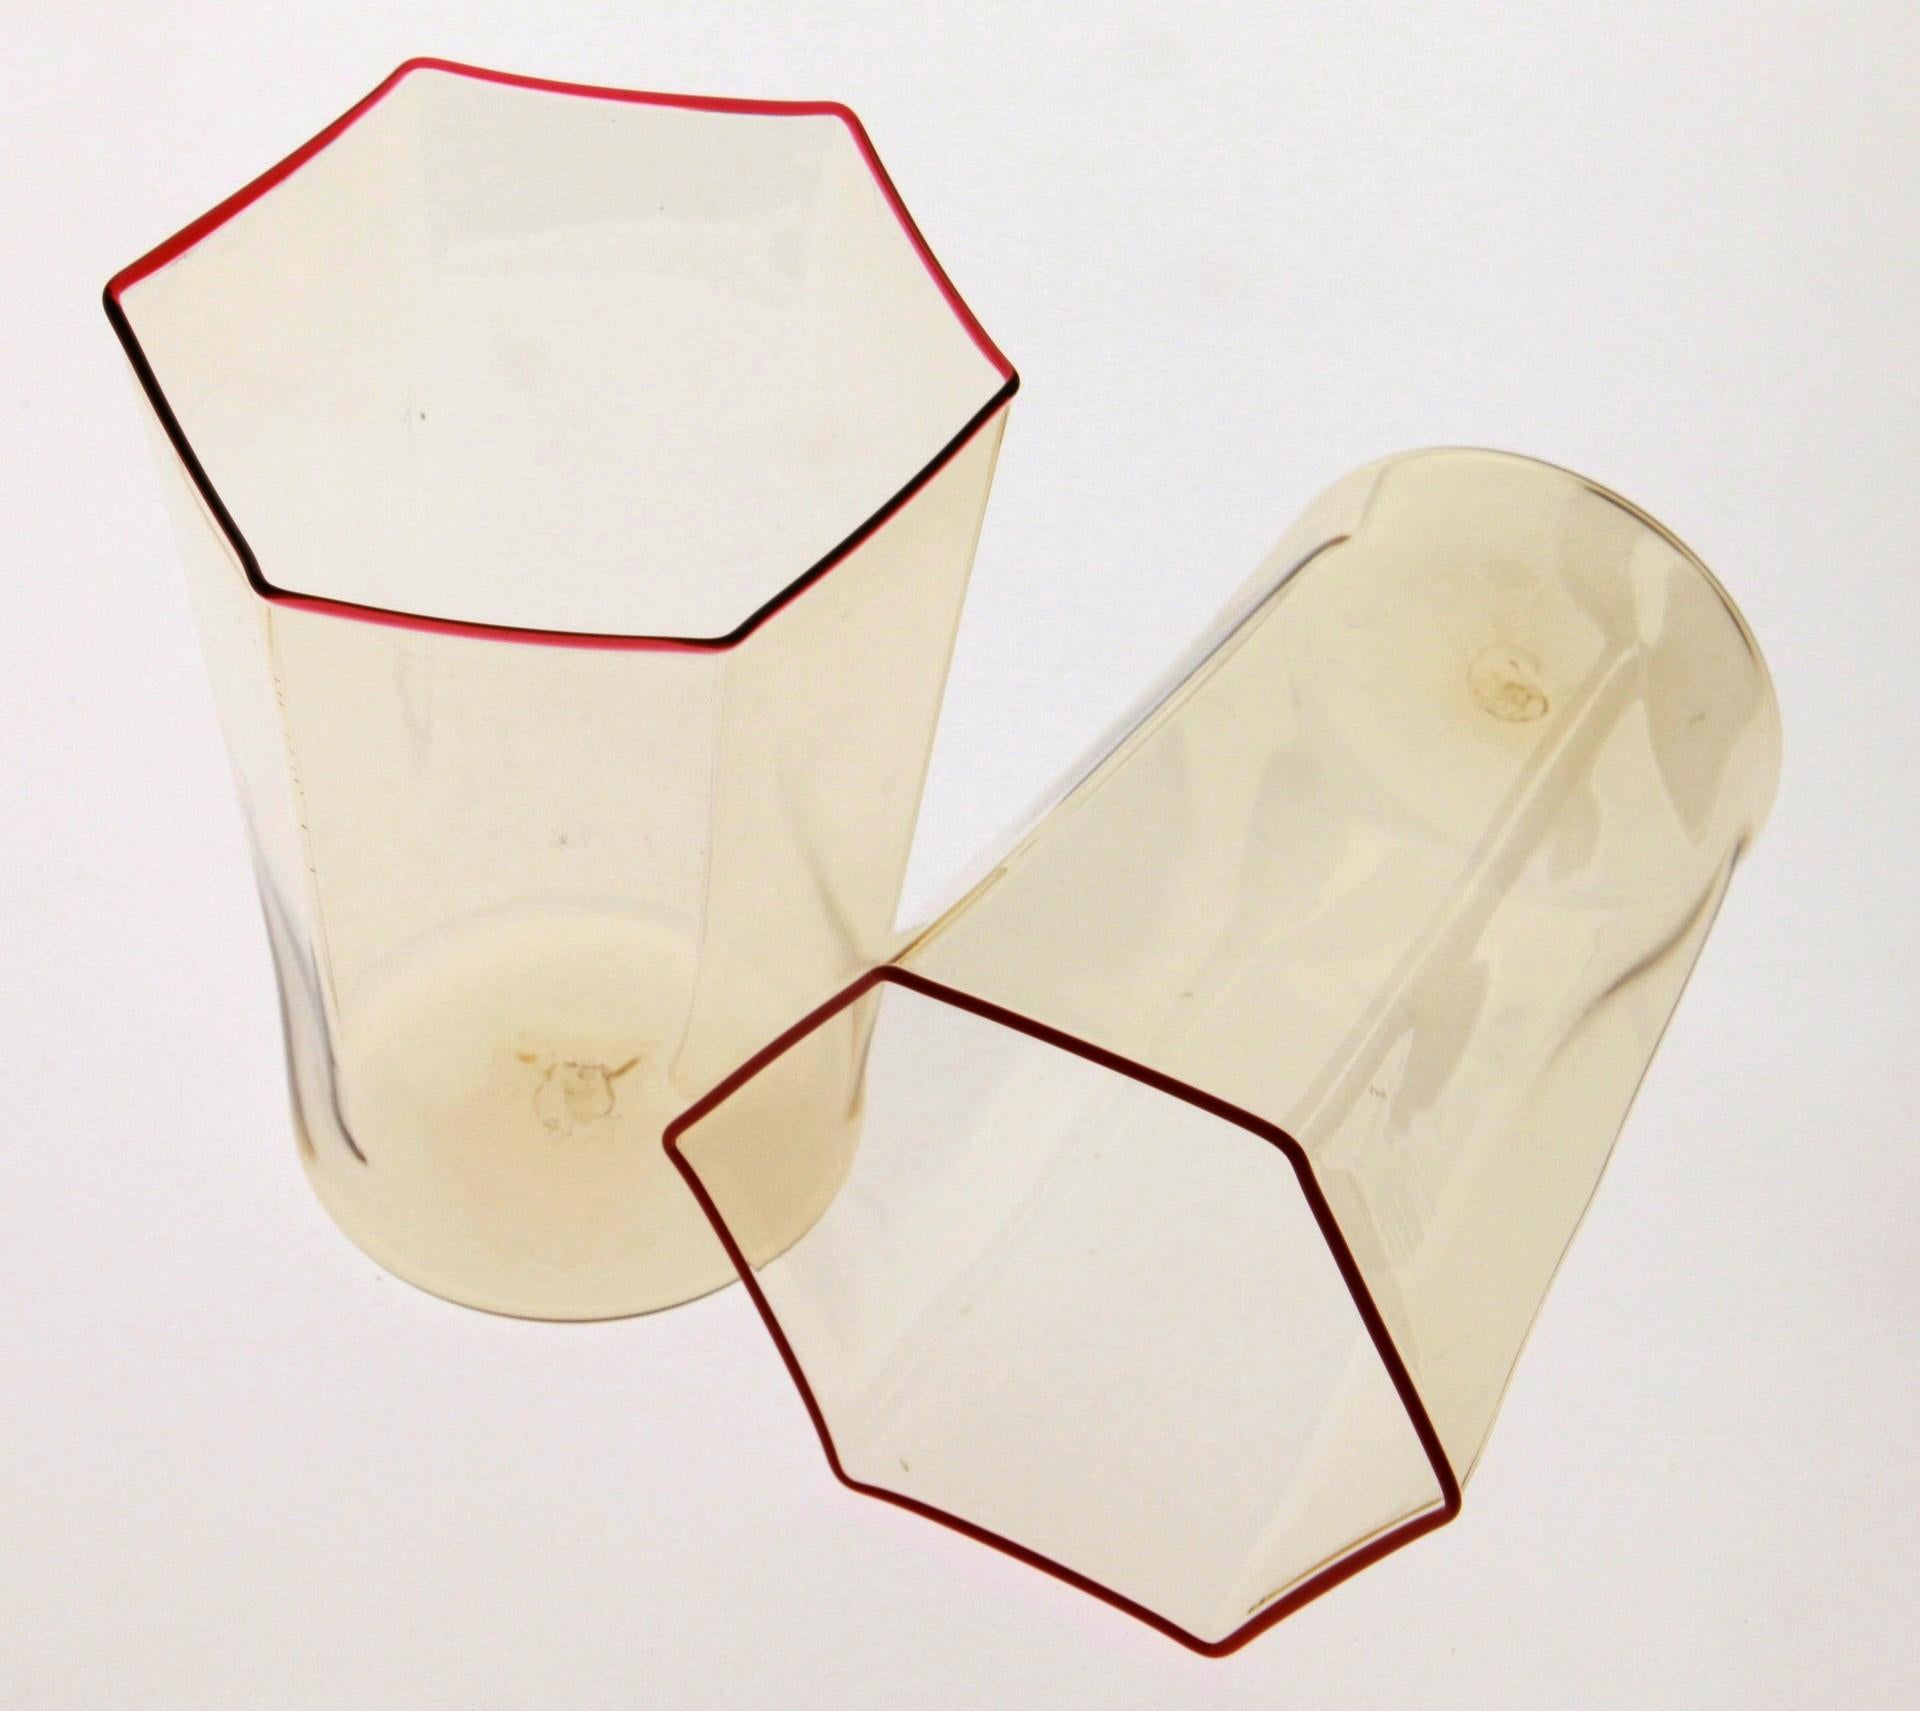 Six Hexagonal Pagliesco Glasses, Assorted Color Rim, Carlo Scarpa, 1932 Design 13